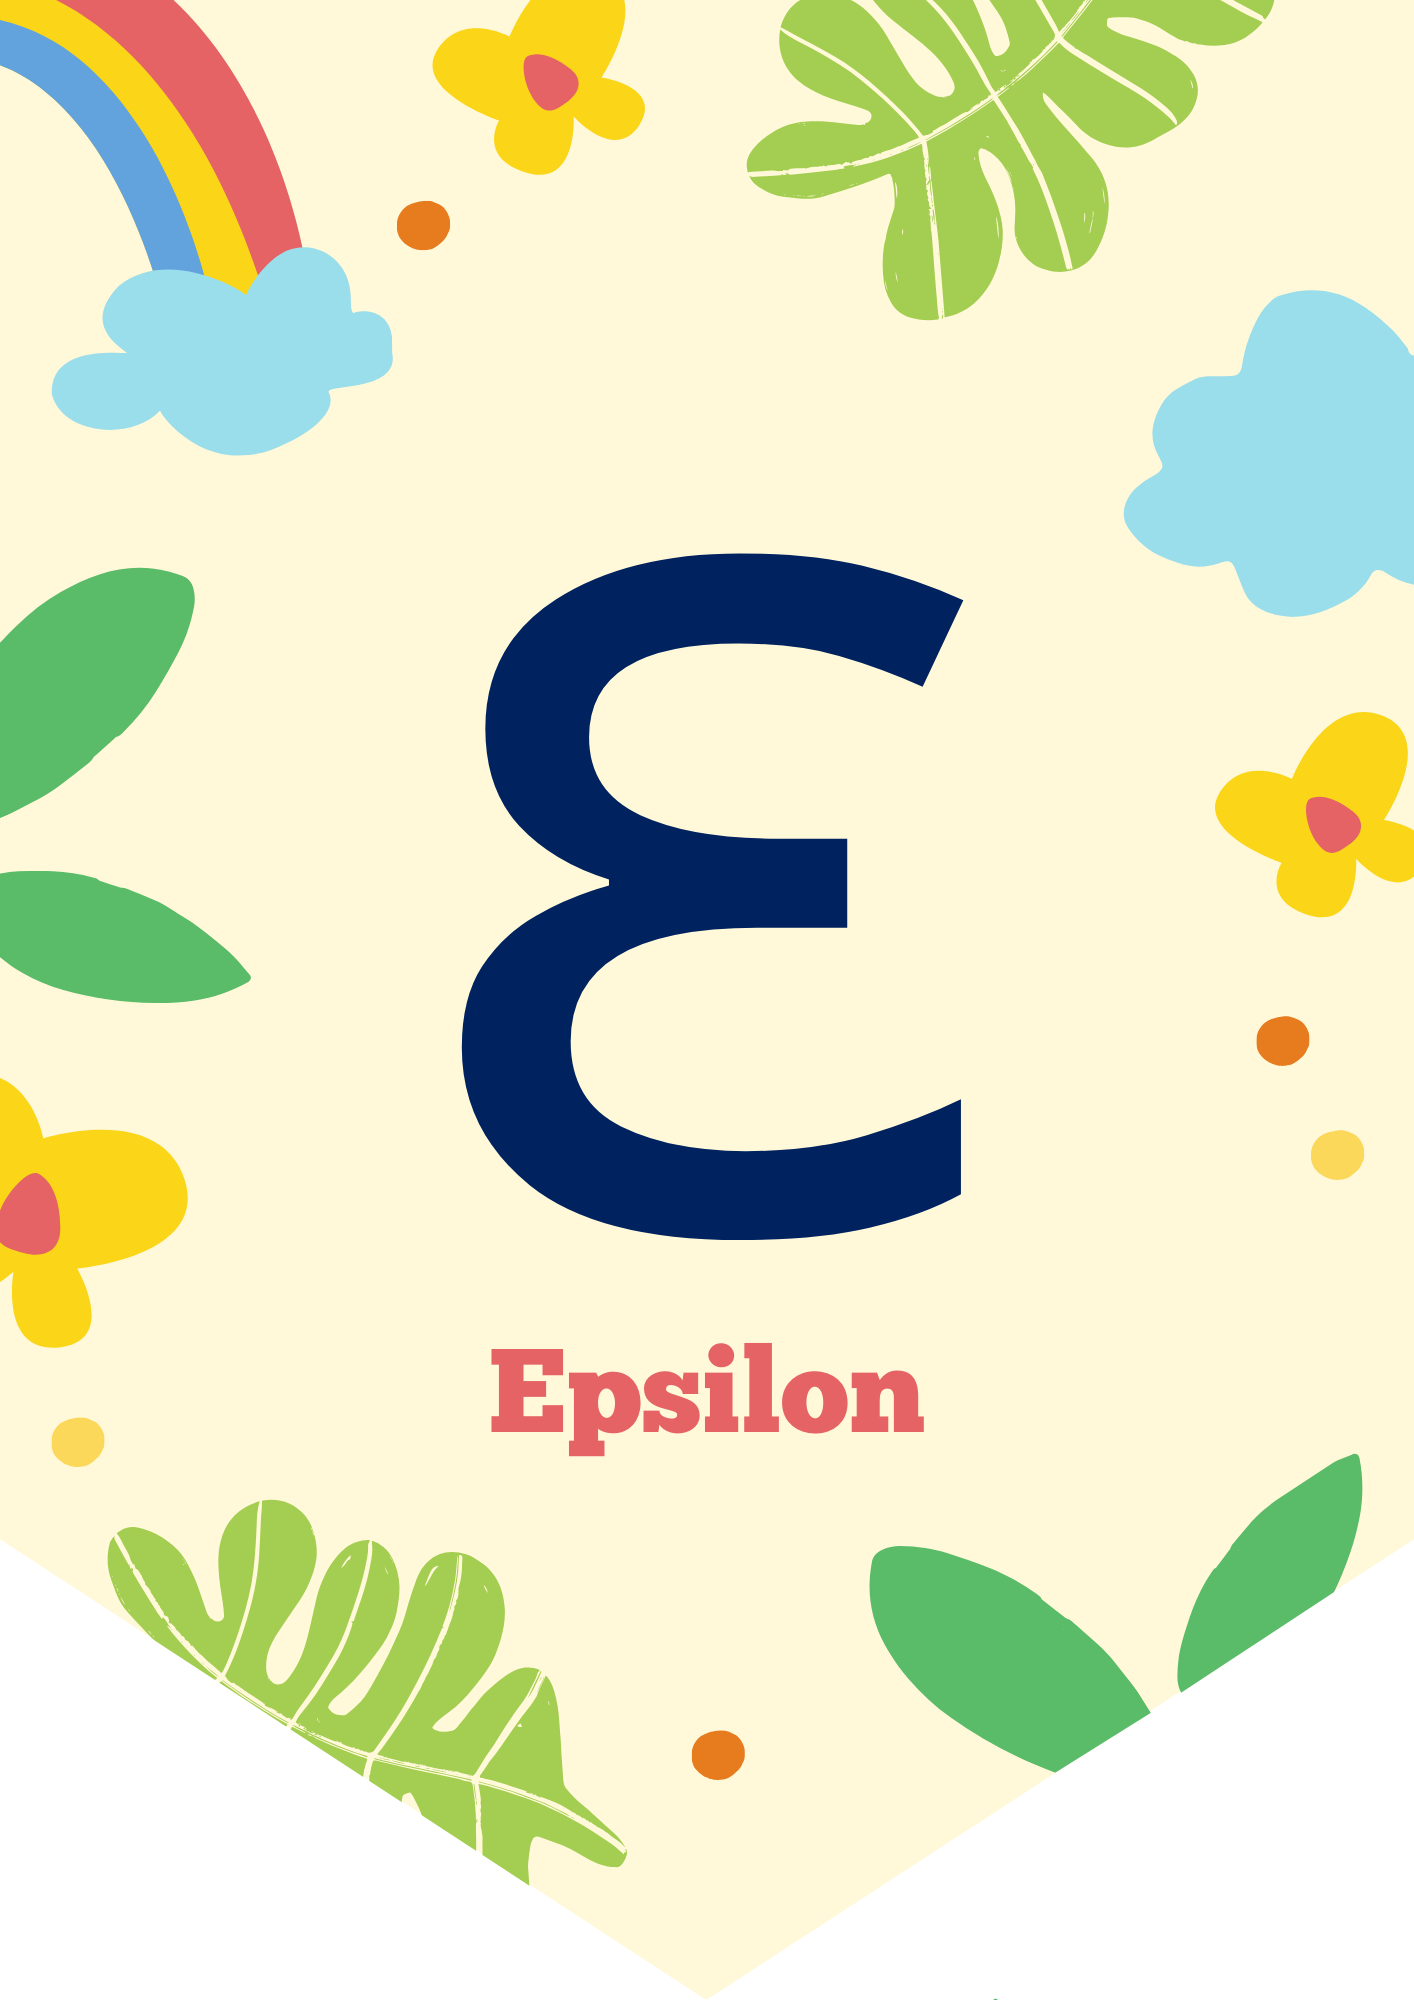 Epsilon: The Fifth Greek Symbol